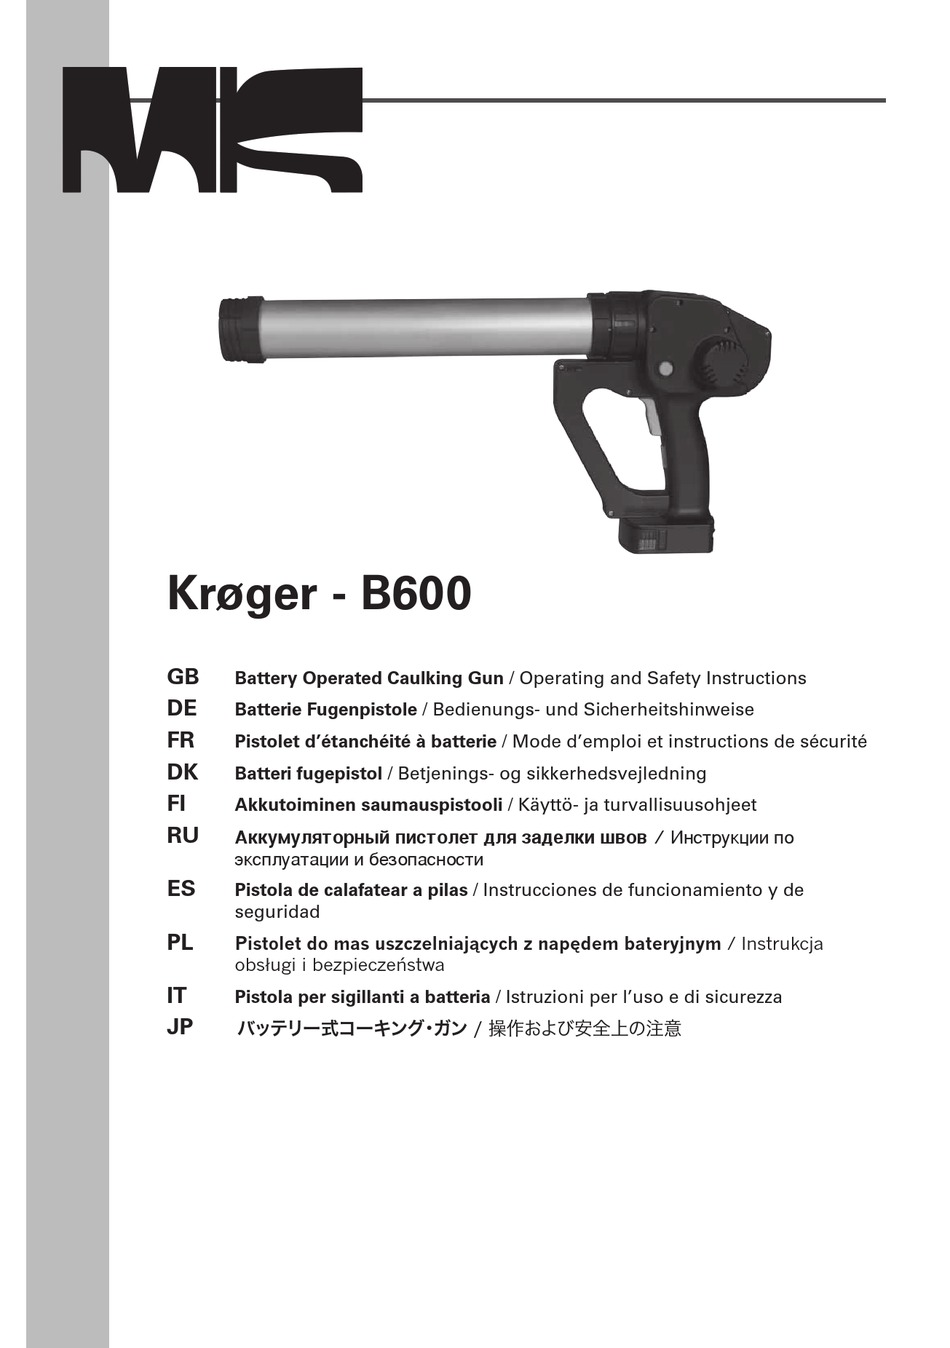 KROGER B600 OPERATING SAFETY INSTRUCTIONS MANUAL Pdf Download | ManualsLib